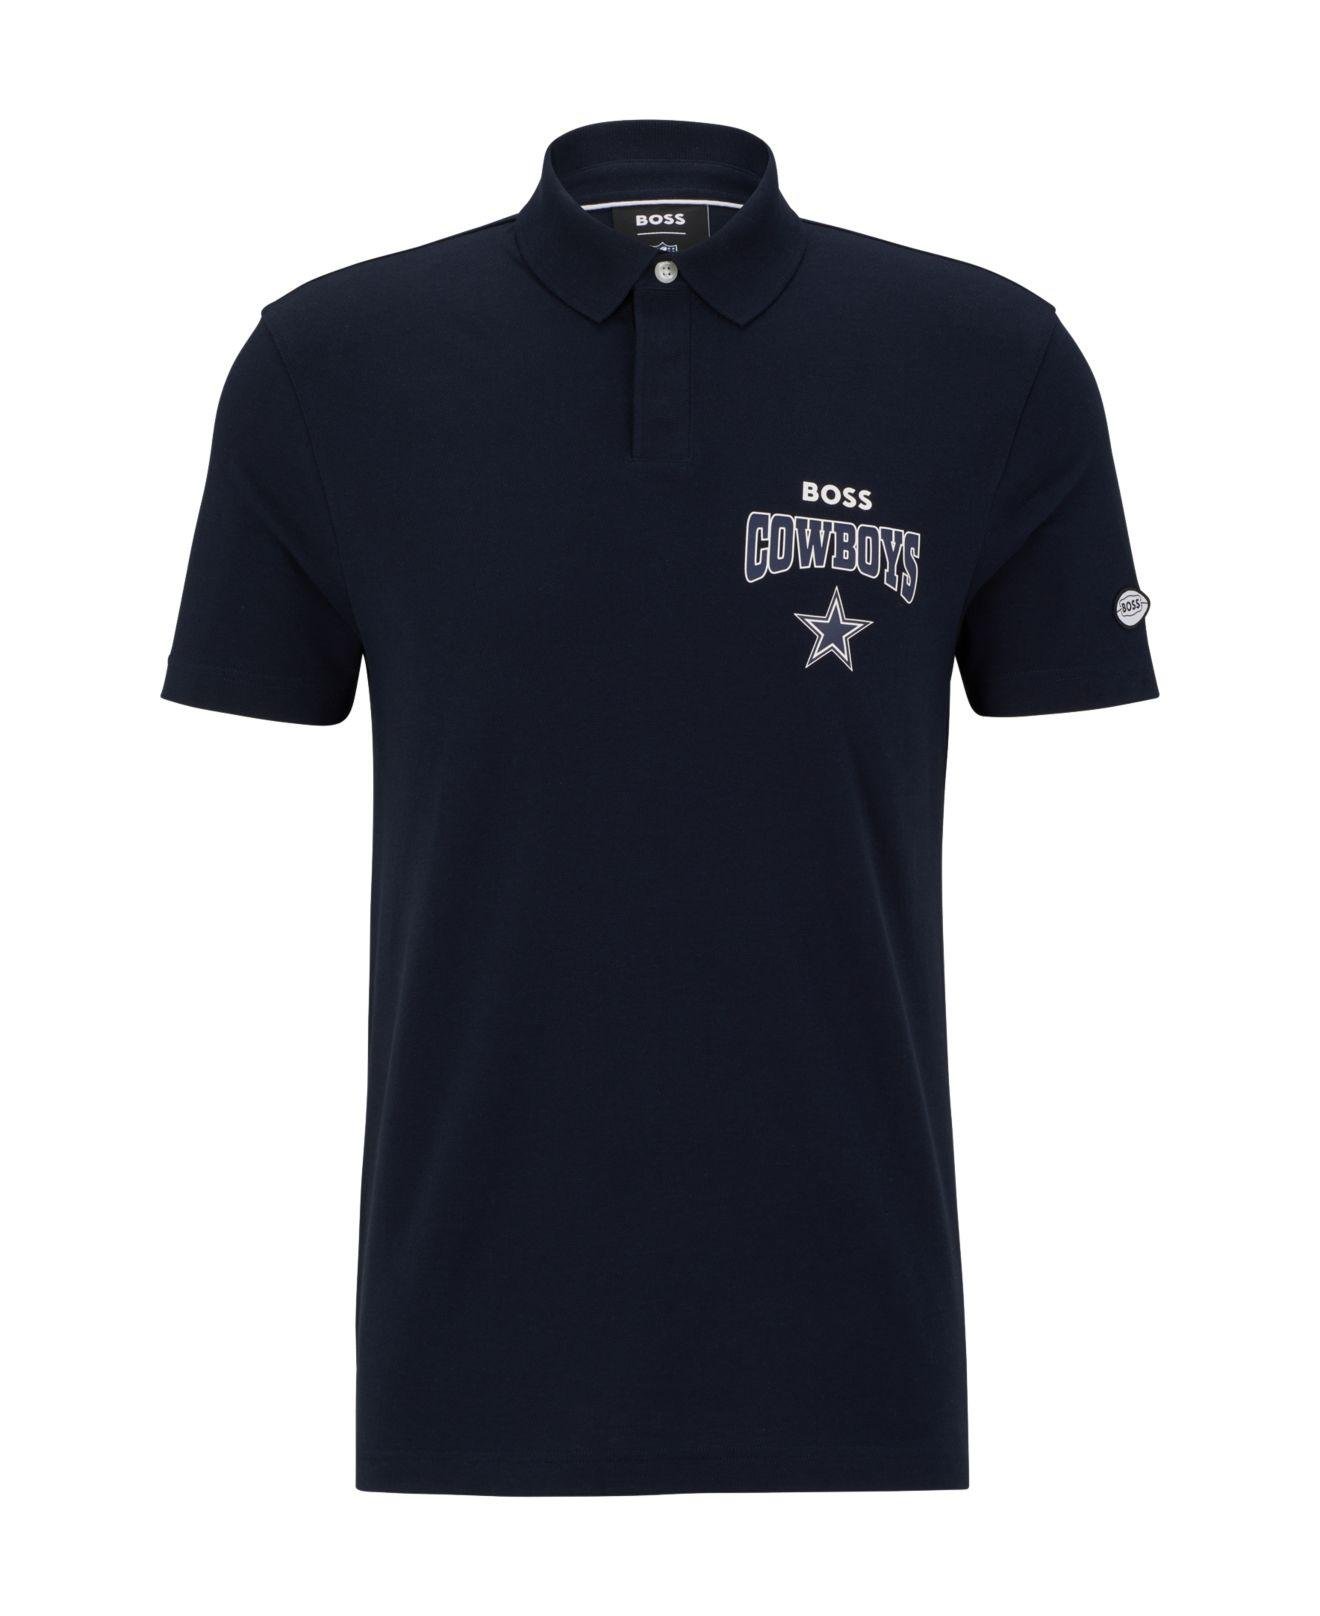 BOSS by HUGO BOSS Dallas Cowboys Polo Shirt in Blue for Men